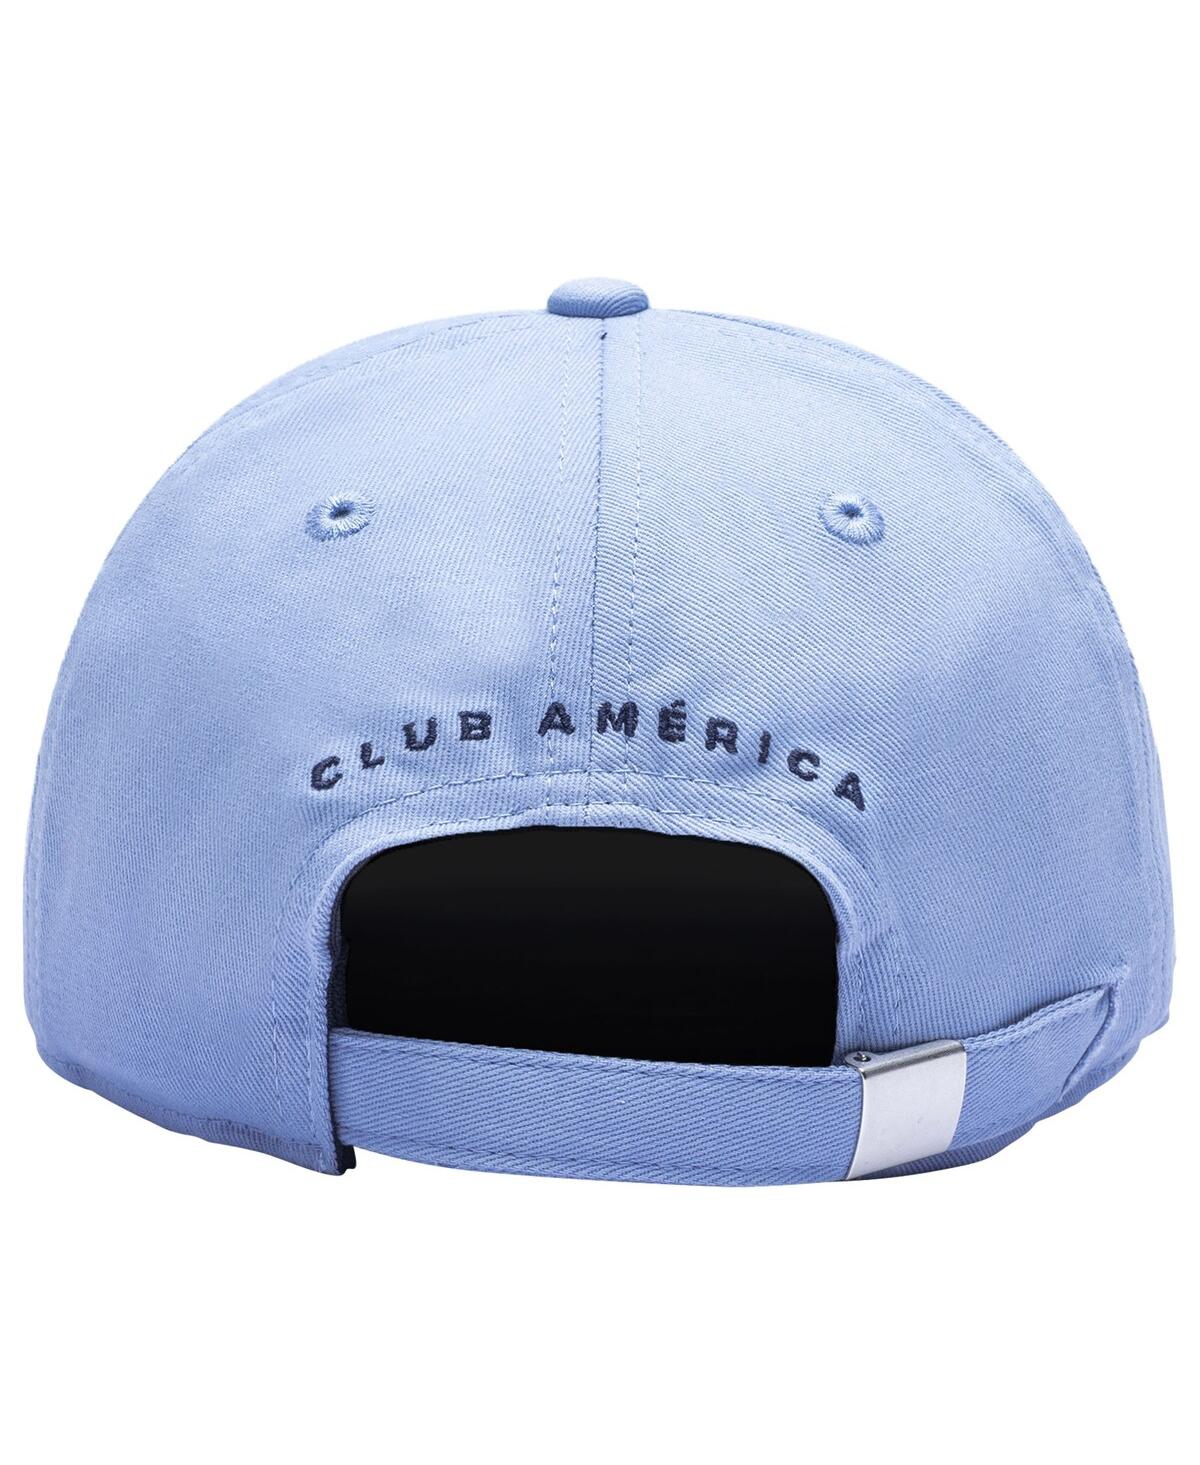 Shop Fan Ink Men's Light Blue Club America Casuals Adjustable Hat